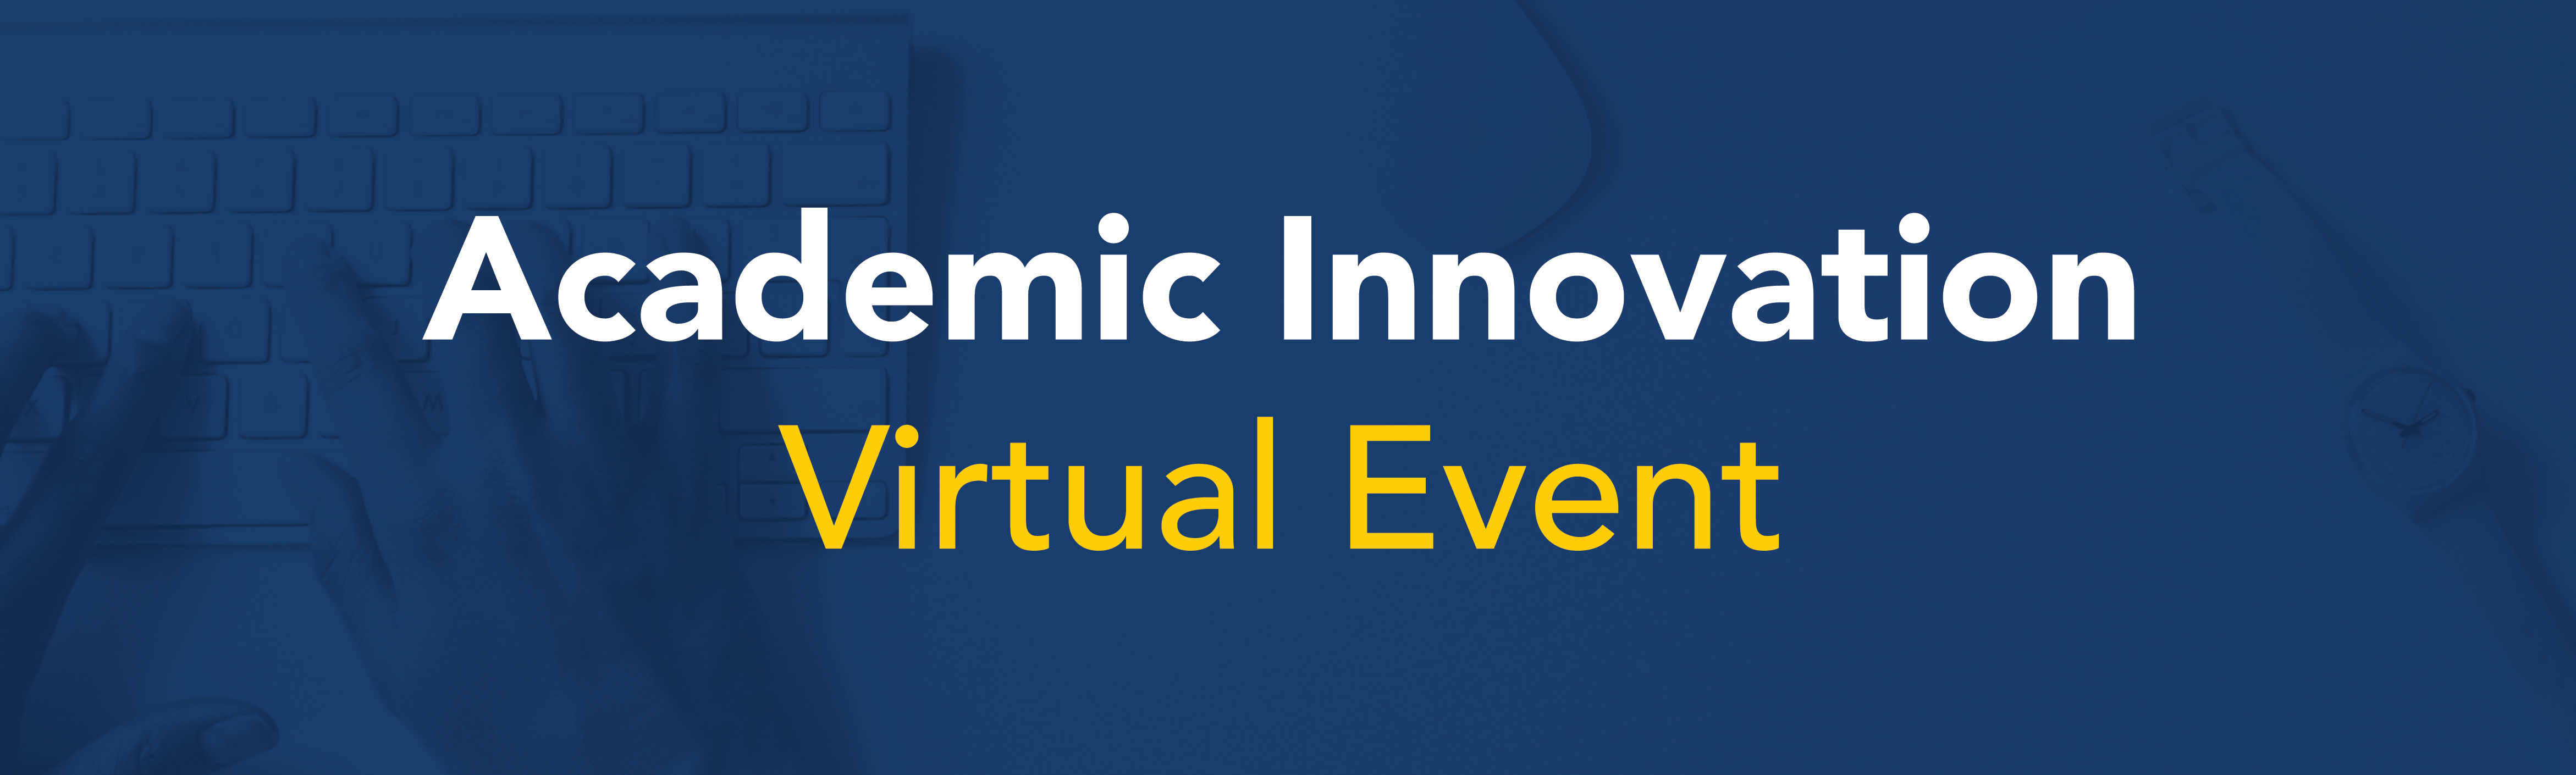 Academic Innovation Virtual Event